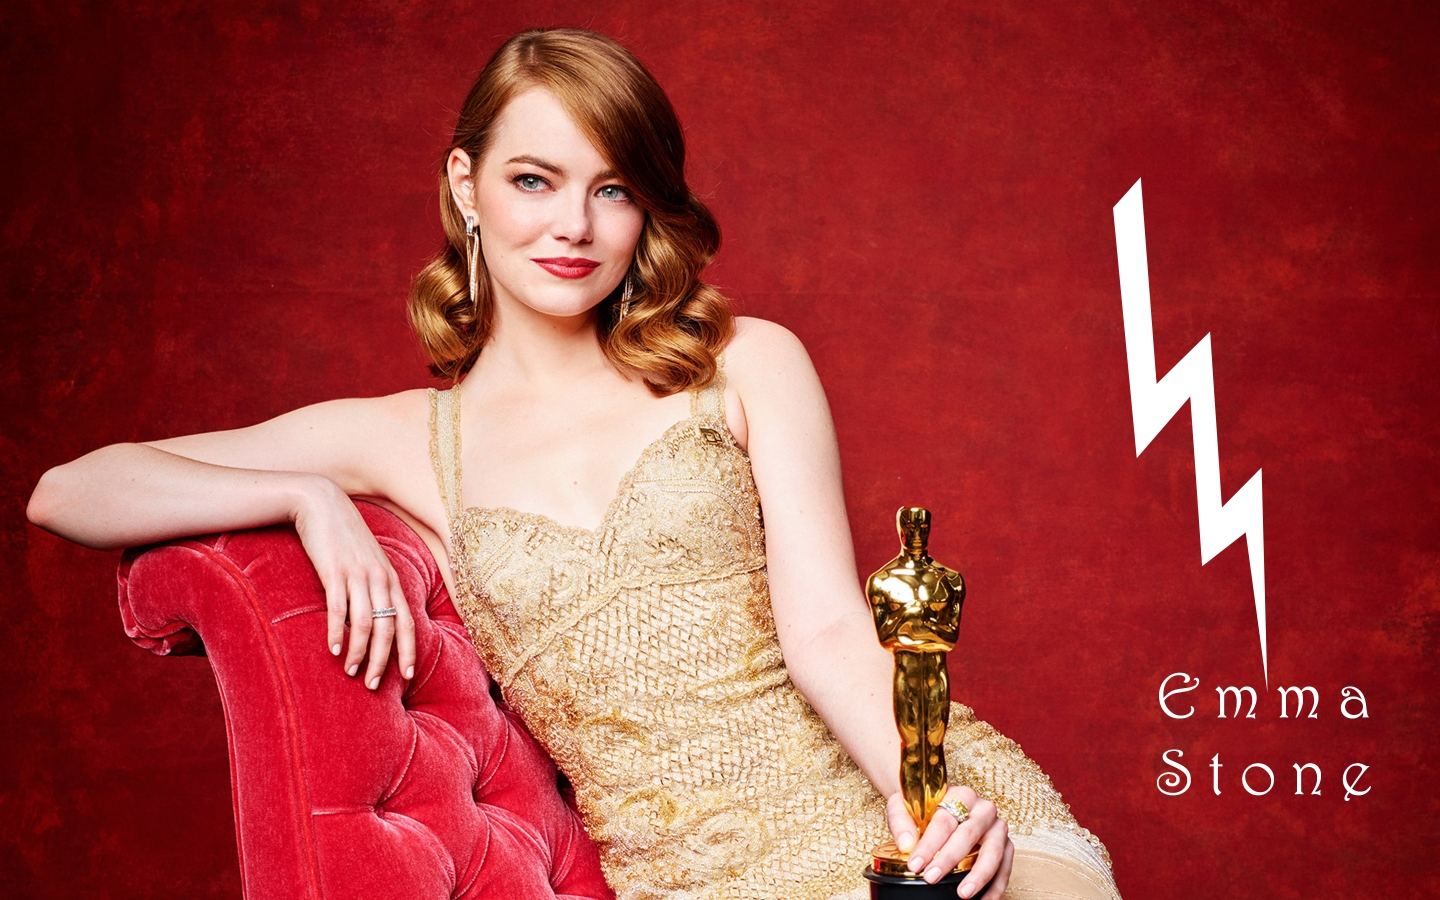 Emma Stone Oscar Winner for 1440 x 900 widescreen resolution